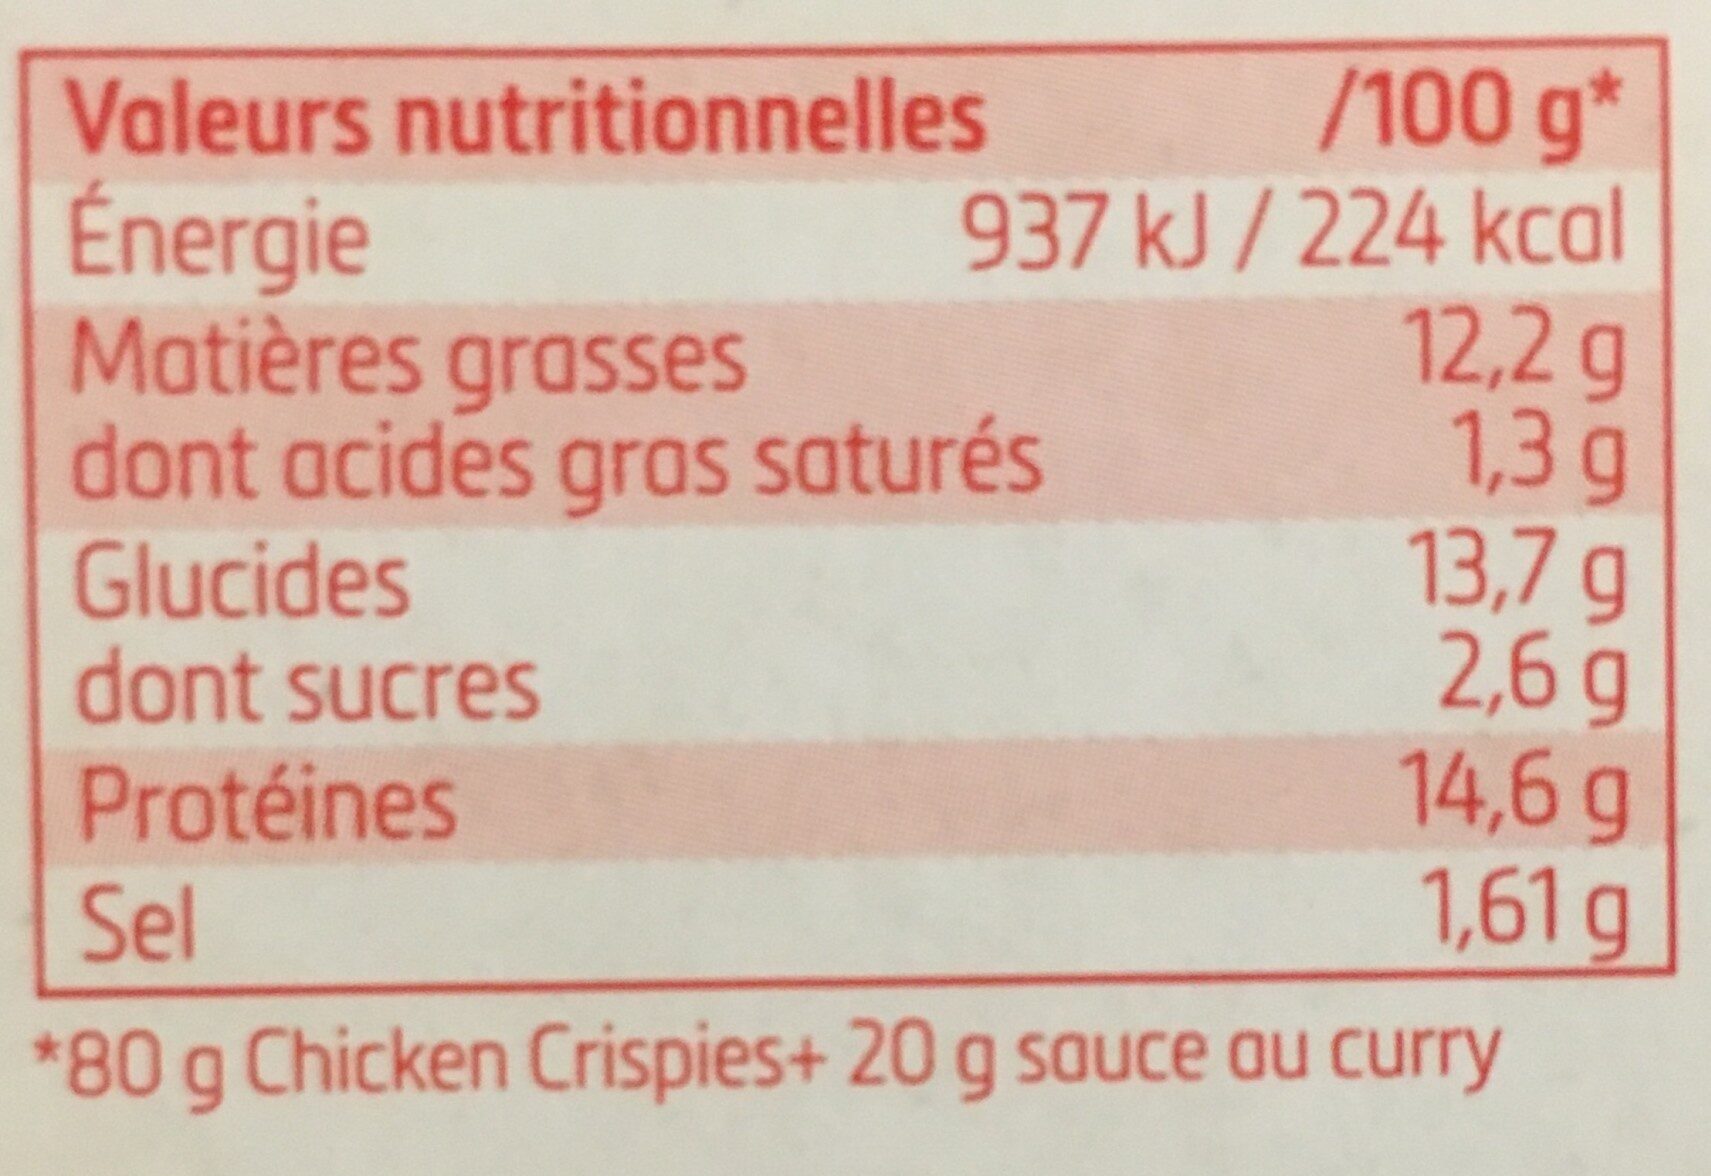 Chicken Crispies - Tableau nutritionnel